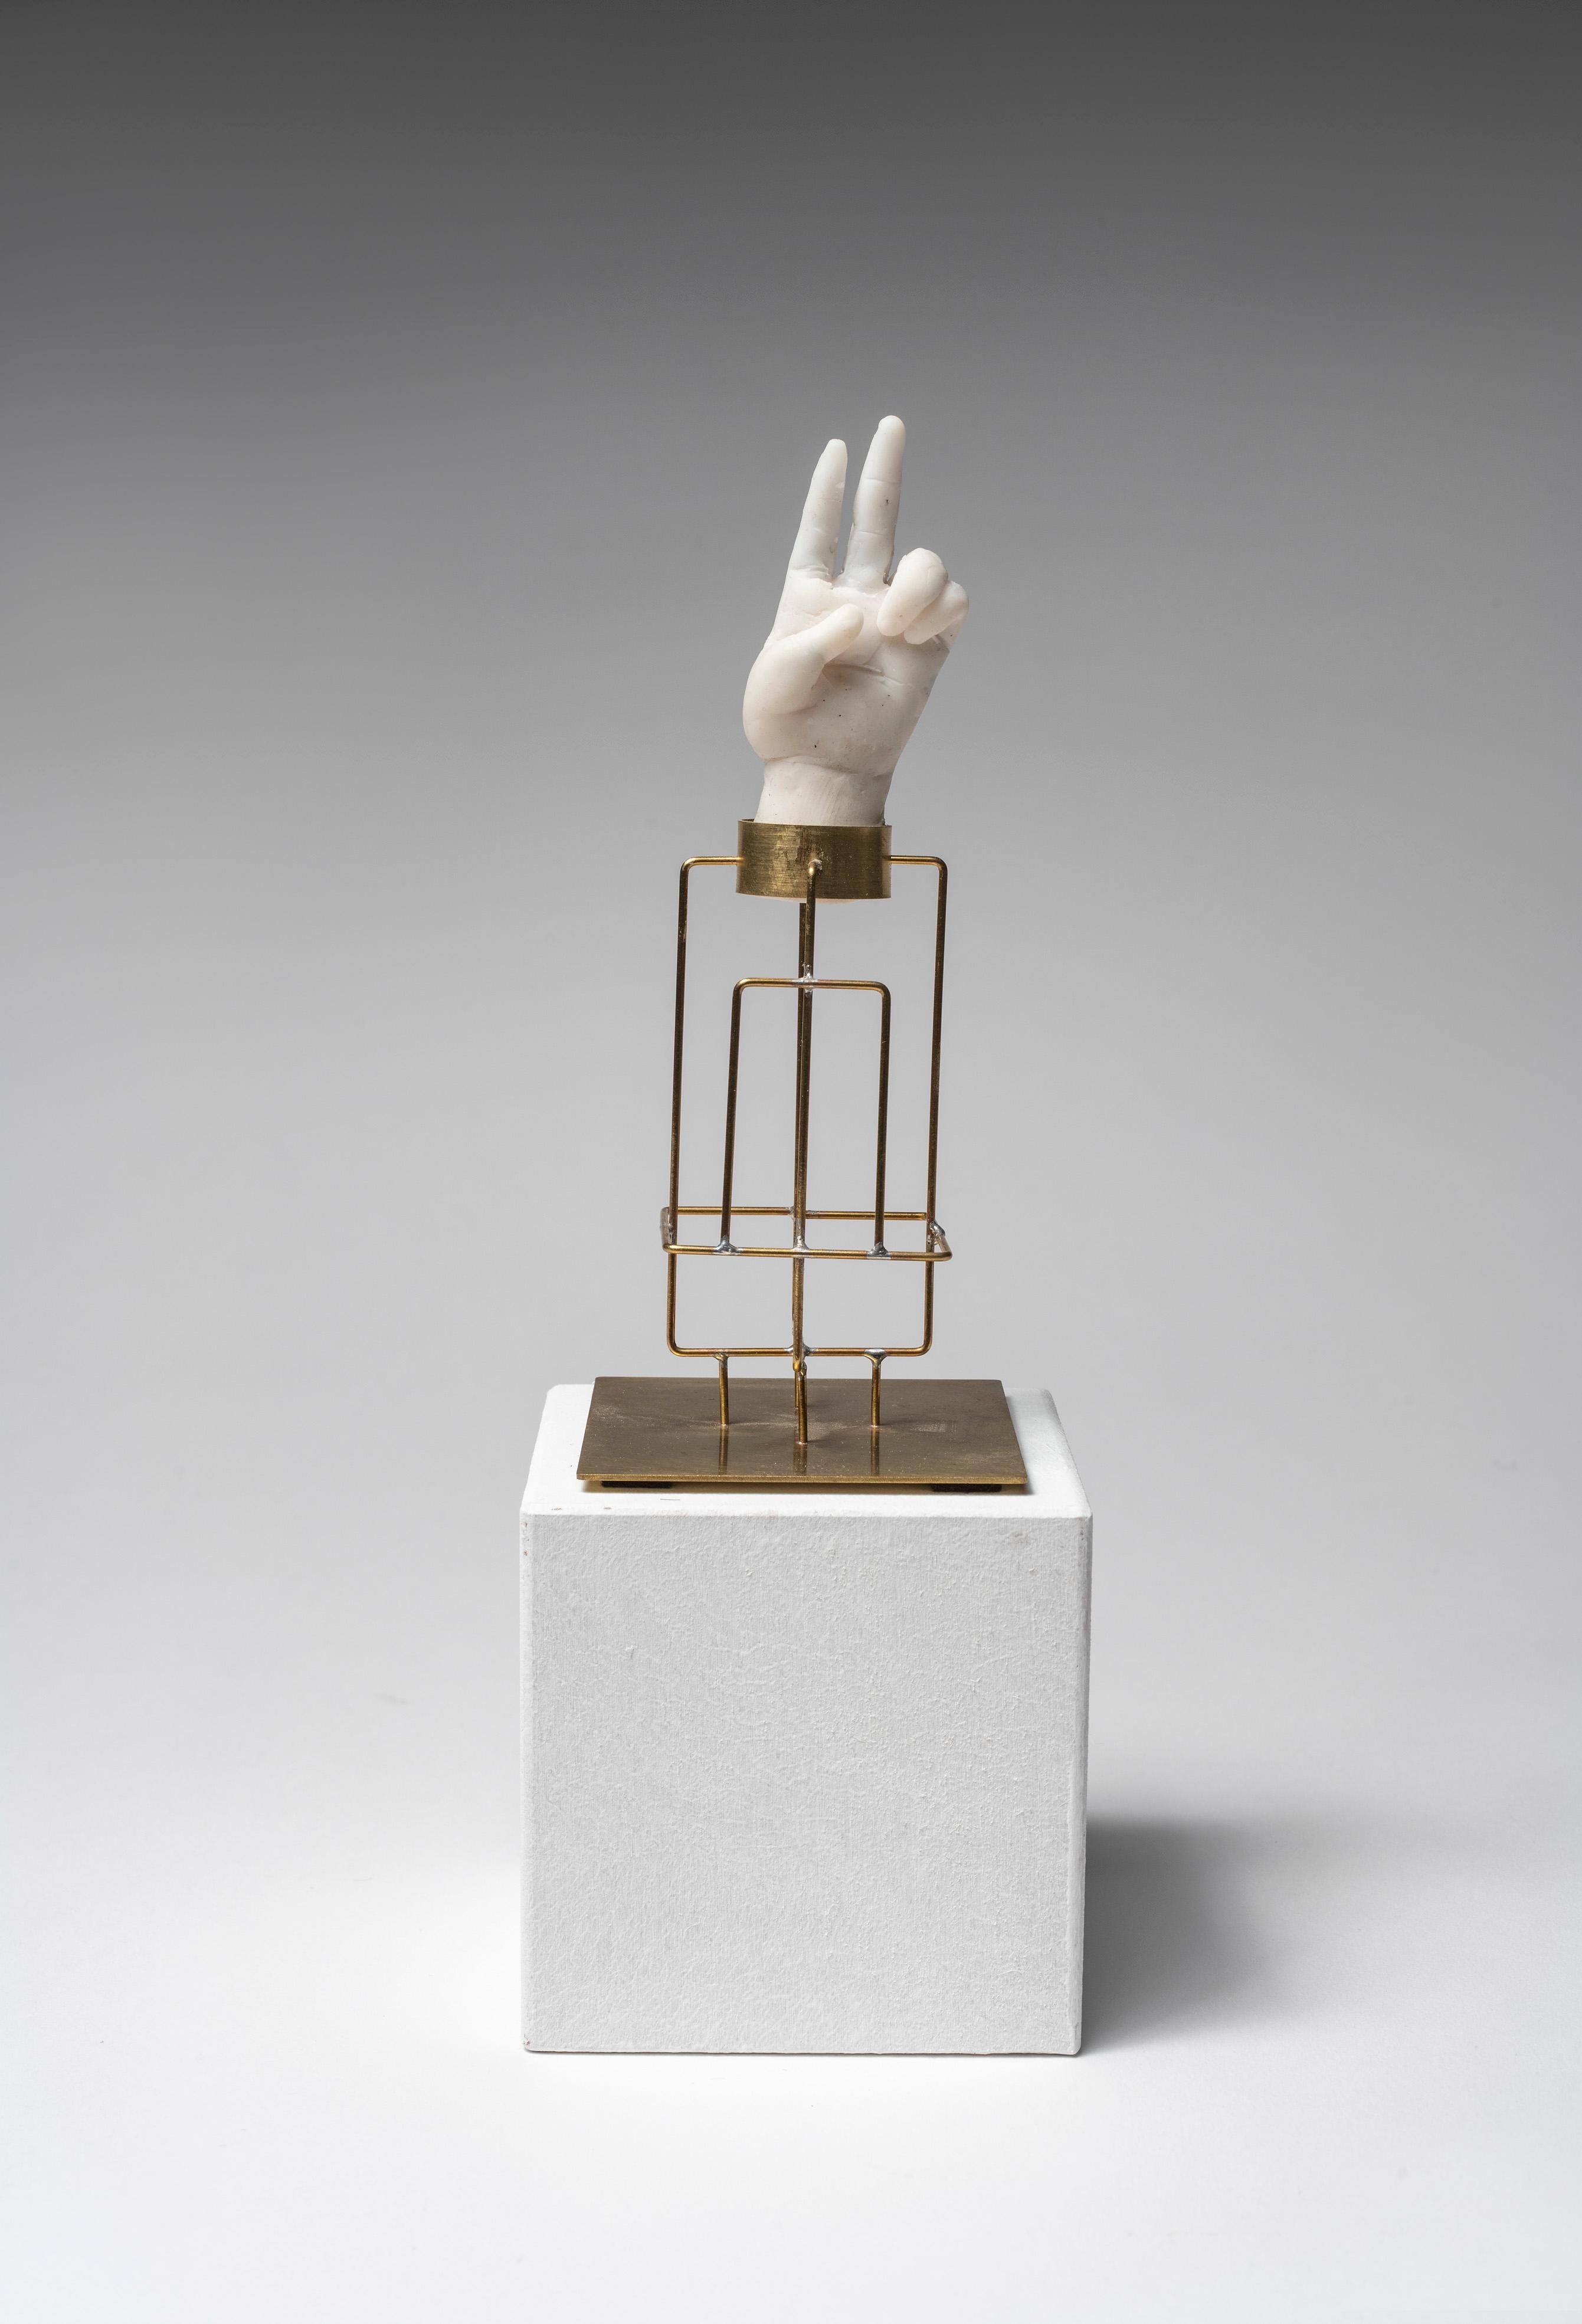 Sculpture de la main : « Pichet principal reliquaire 3 »